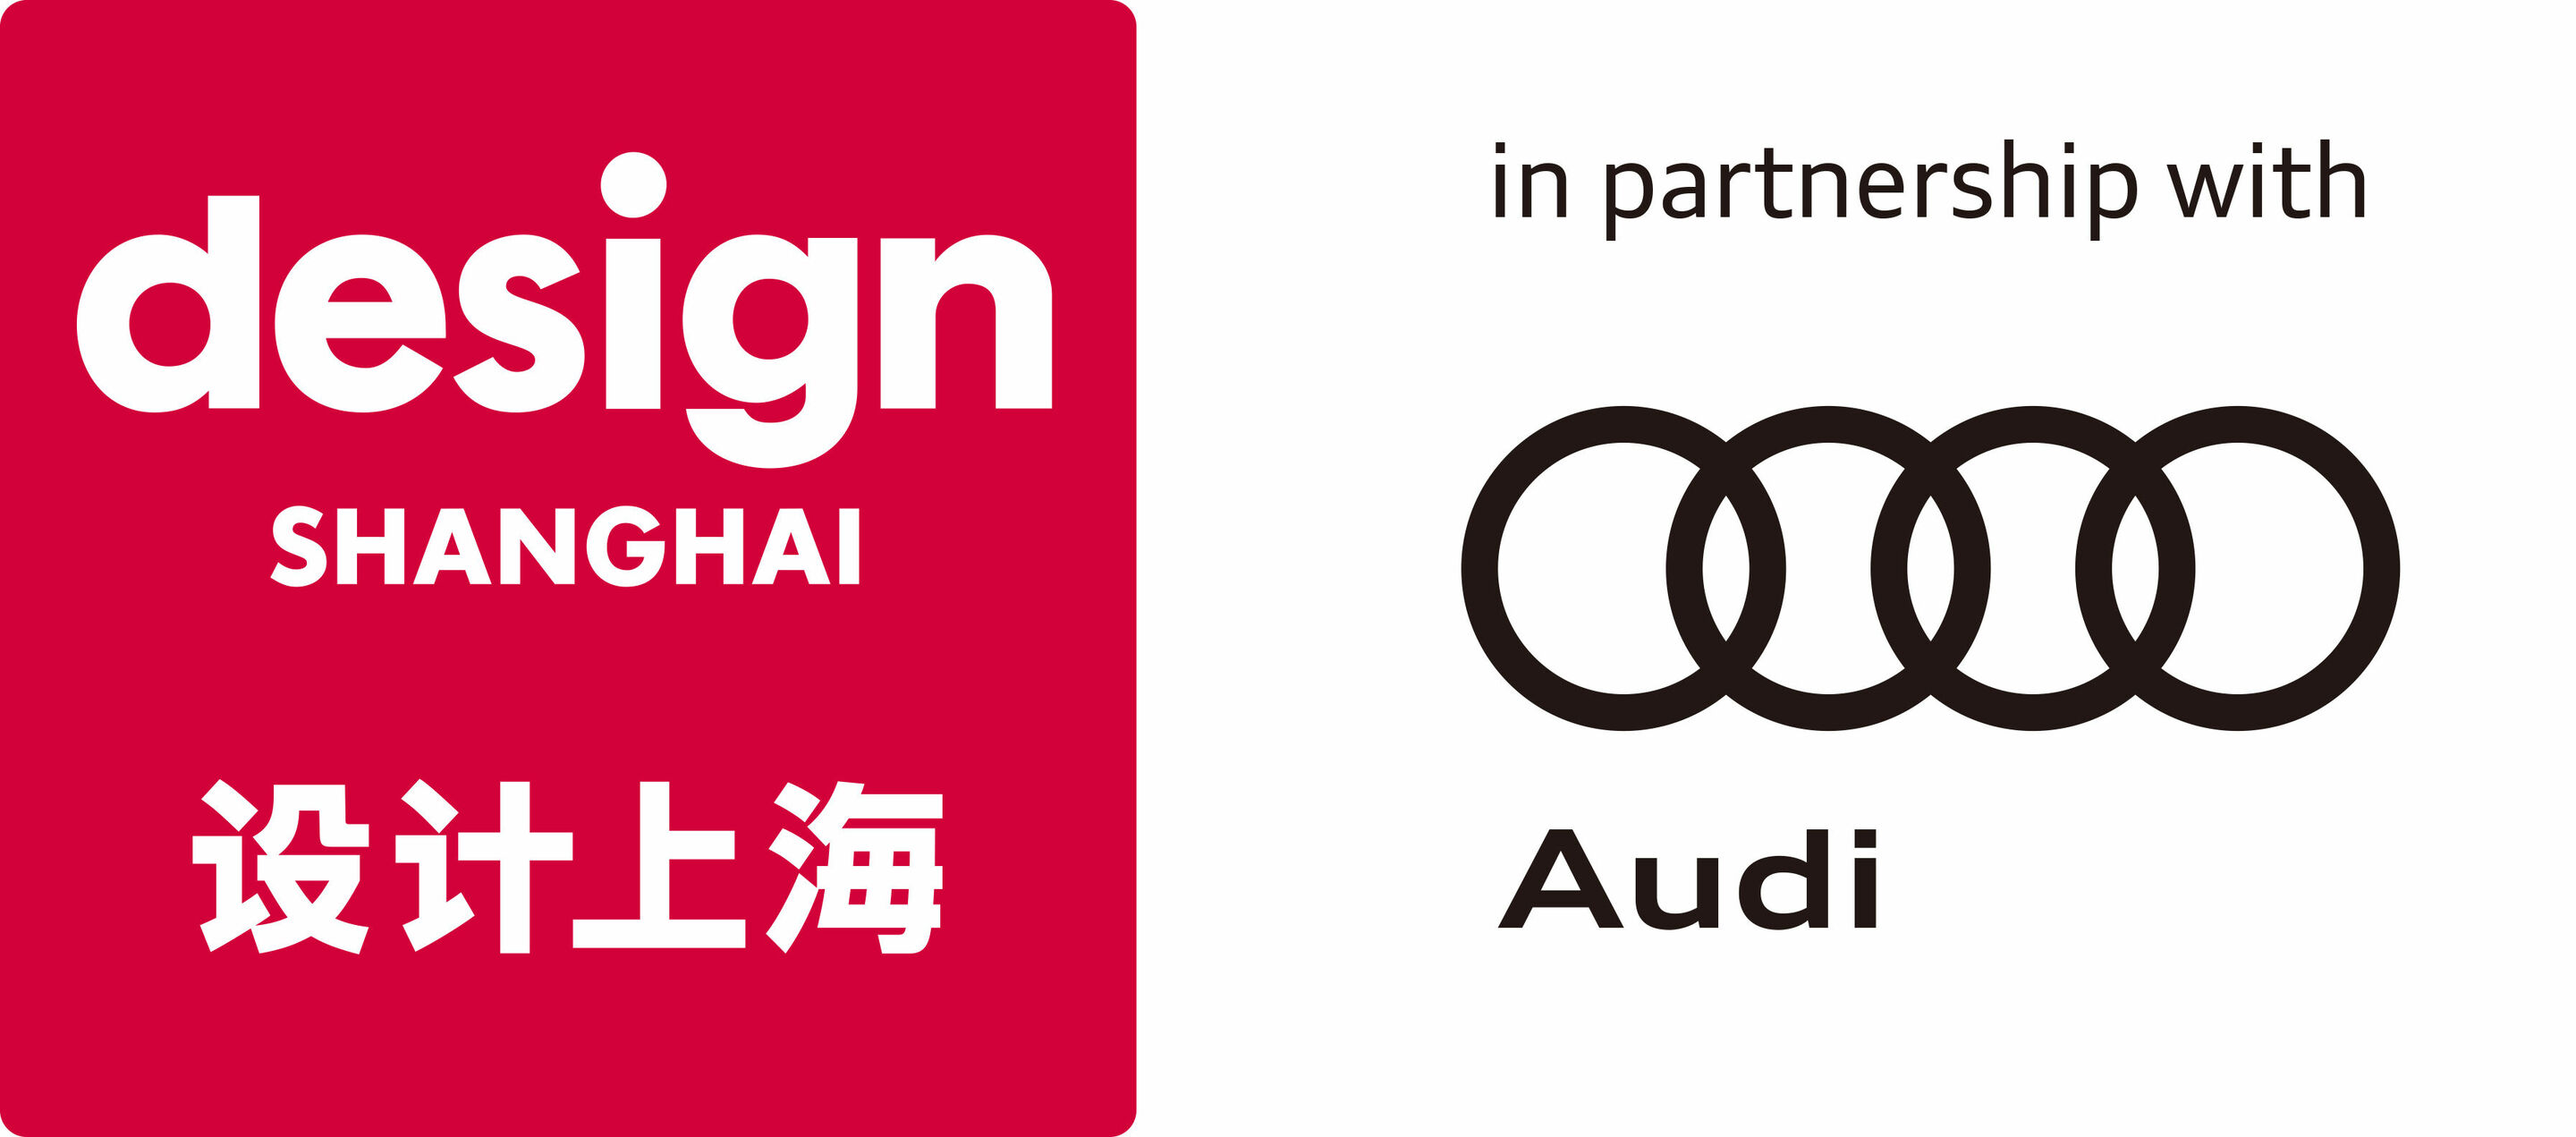 Audi ist Hauptsponsor der Design Shanghai